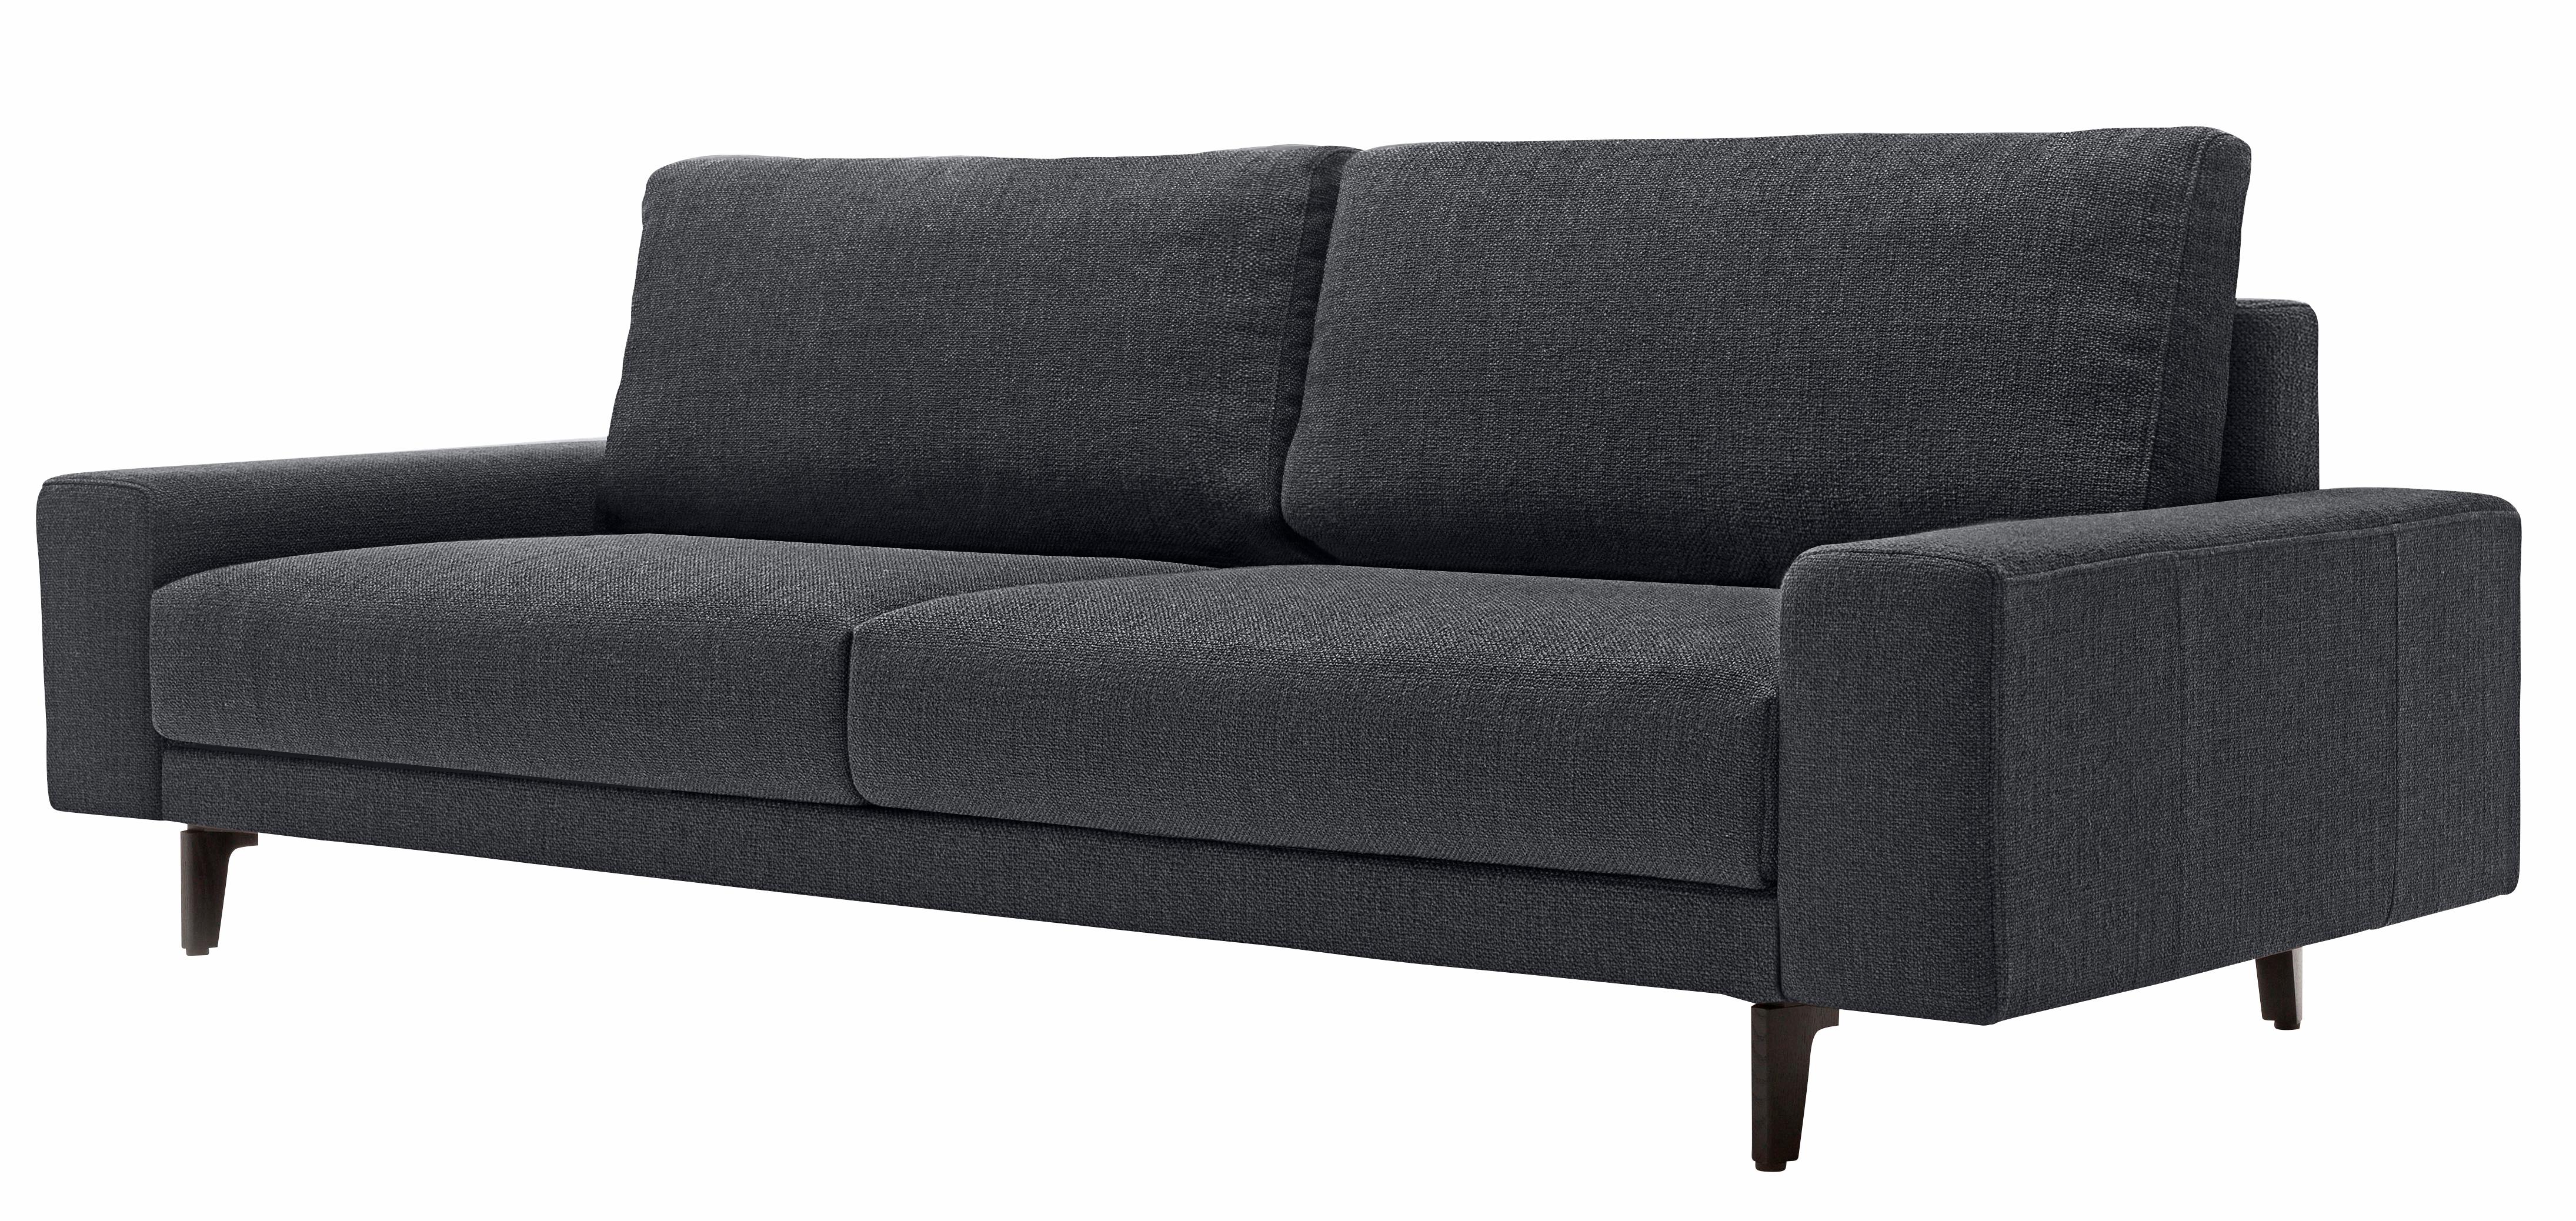 hülsta sofa 3-Sitzer hs.450, Armlehne breit niedrig, Breite 220 cm, Alugussfuß Umbragrau, wahlweise in Stoff oder Leder